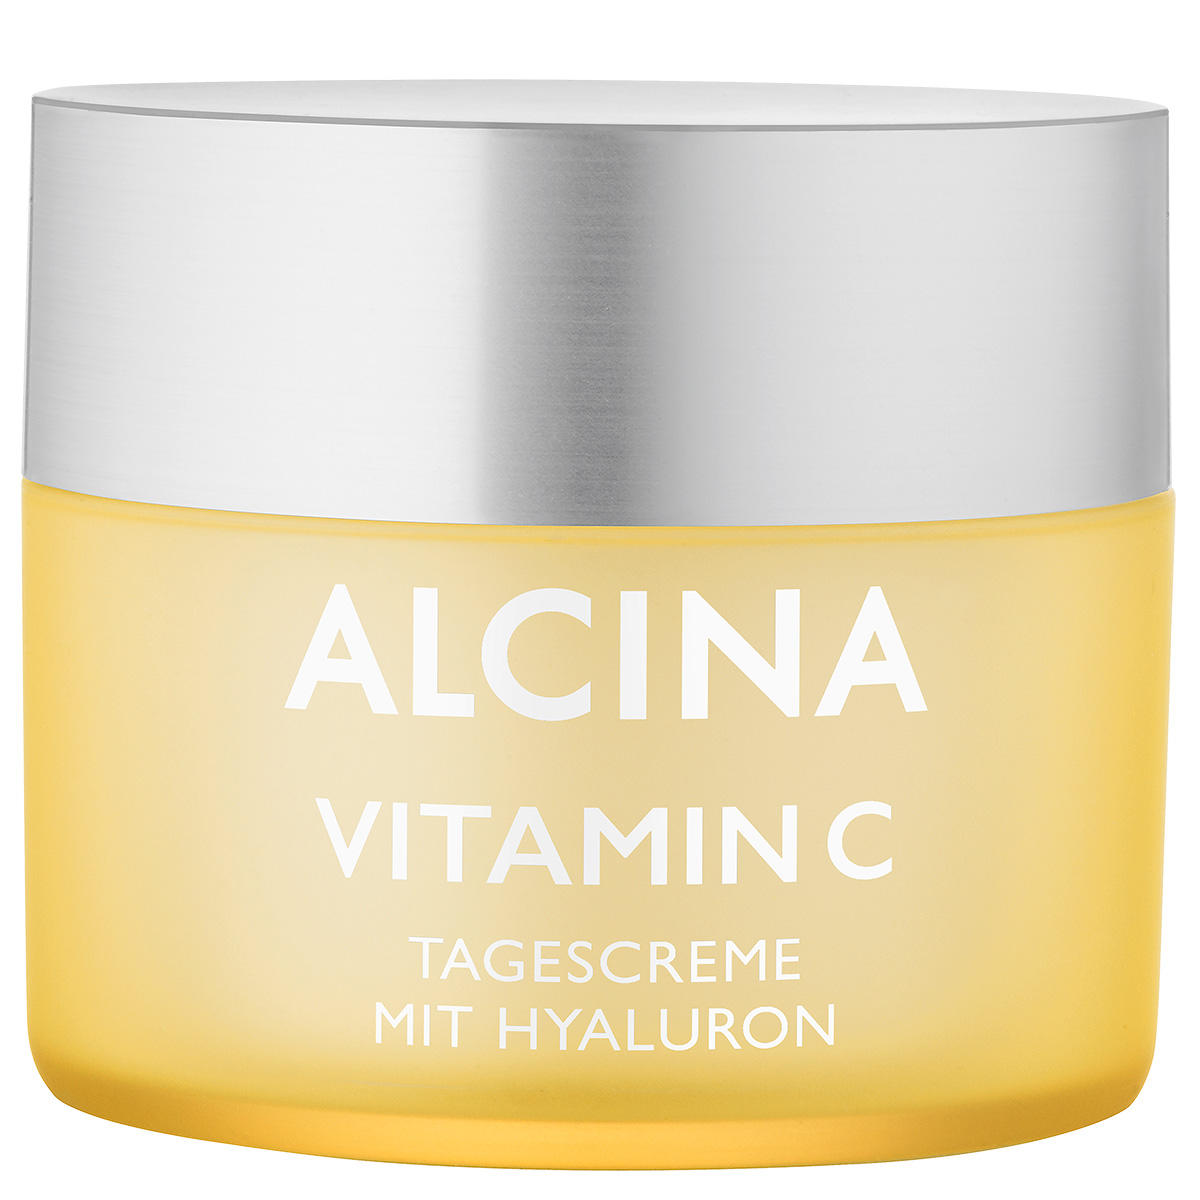 Alcina Vitamin C Tagescreme 50 ml - 2